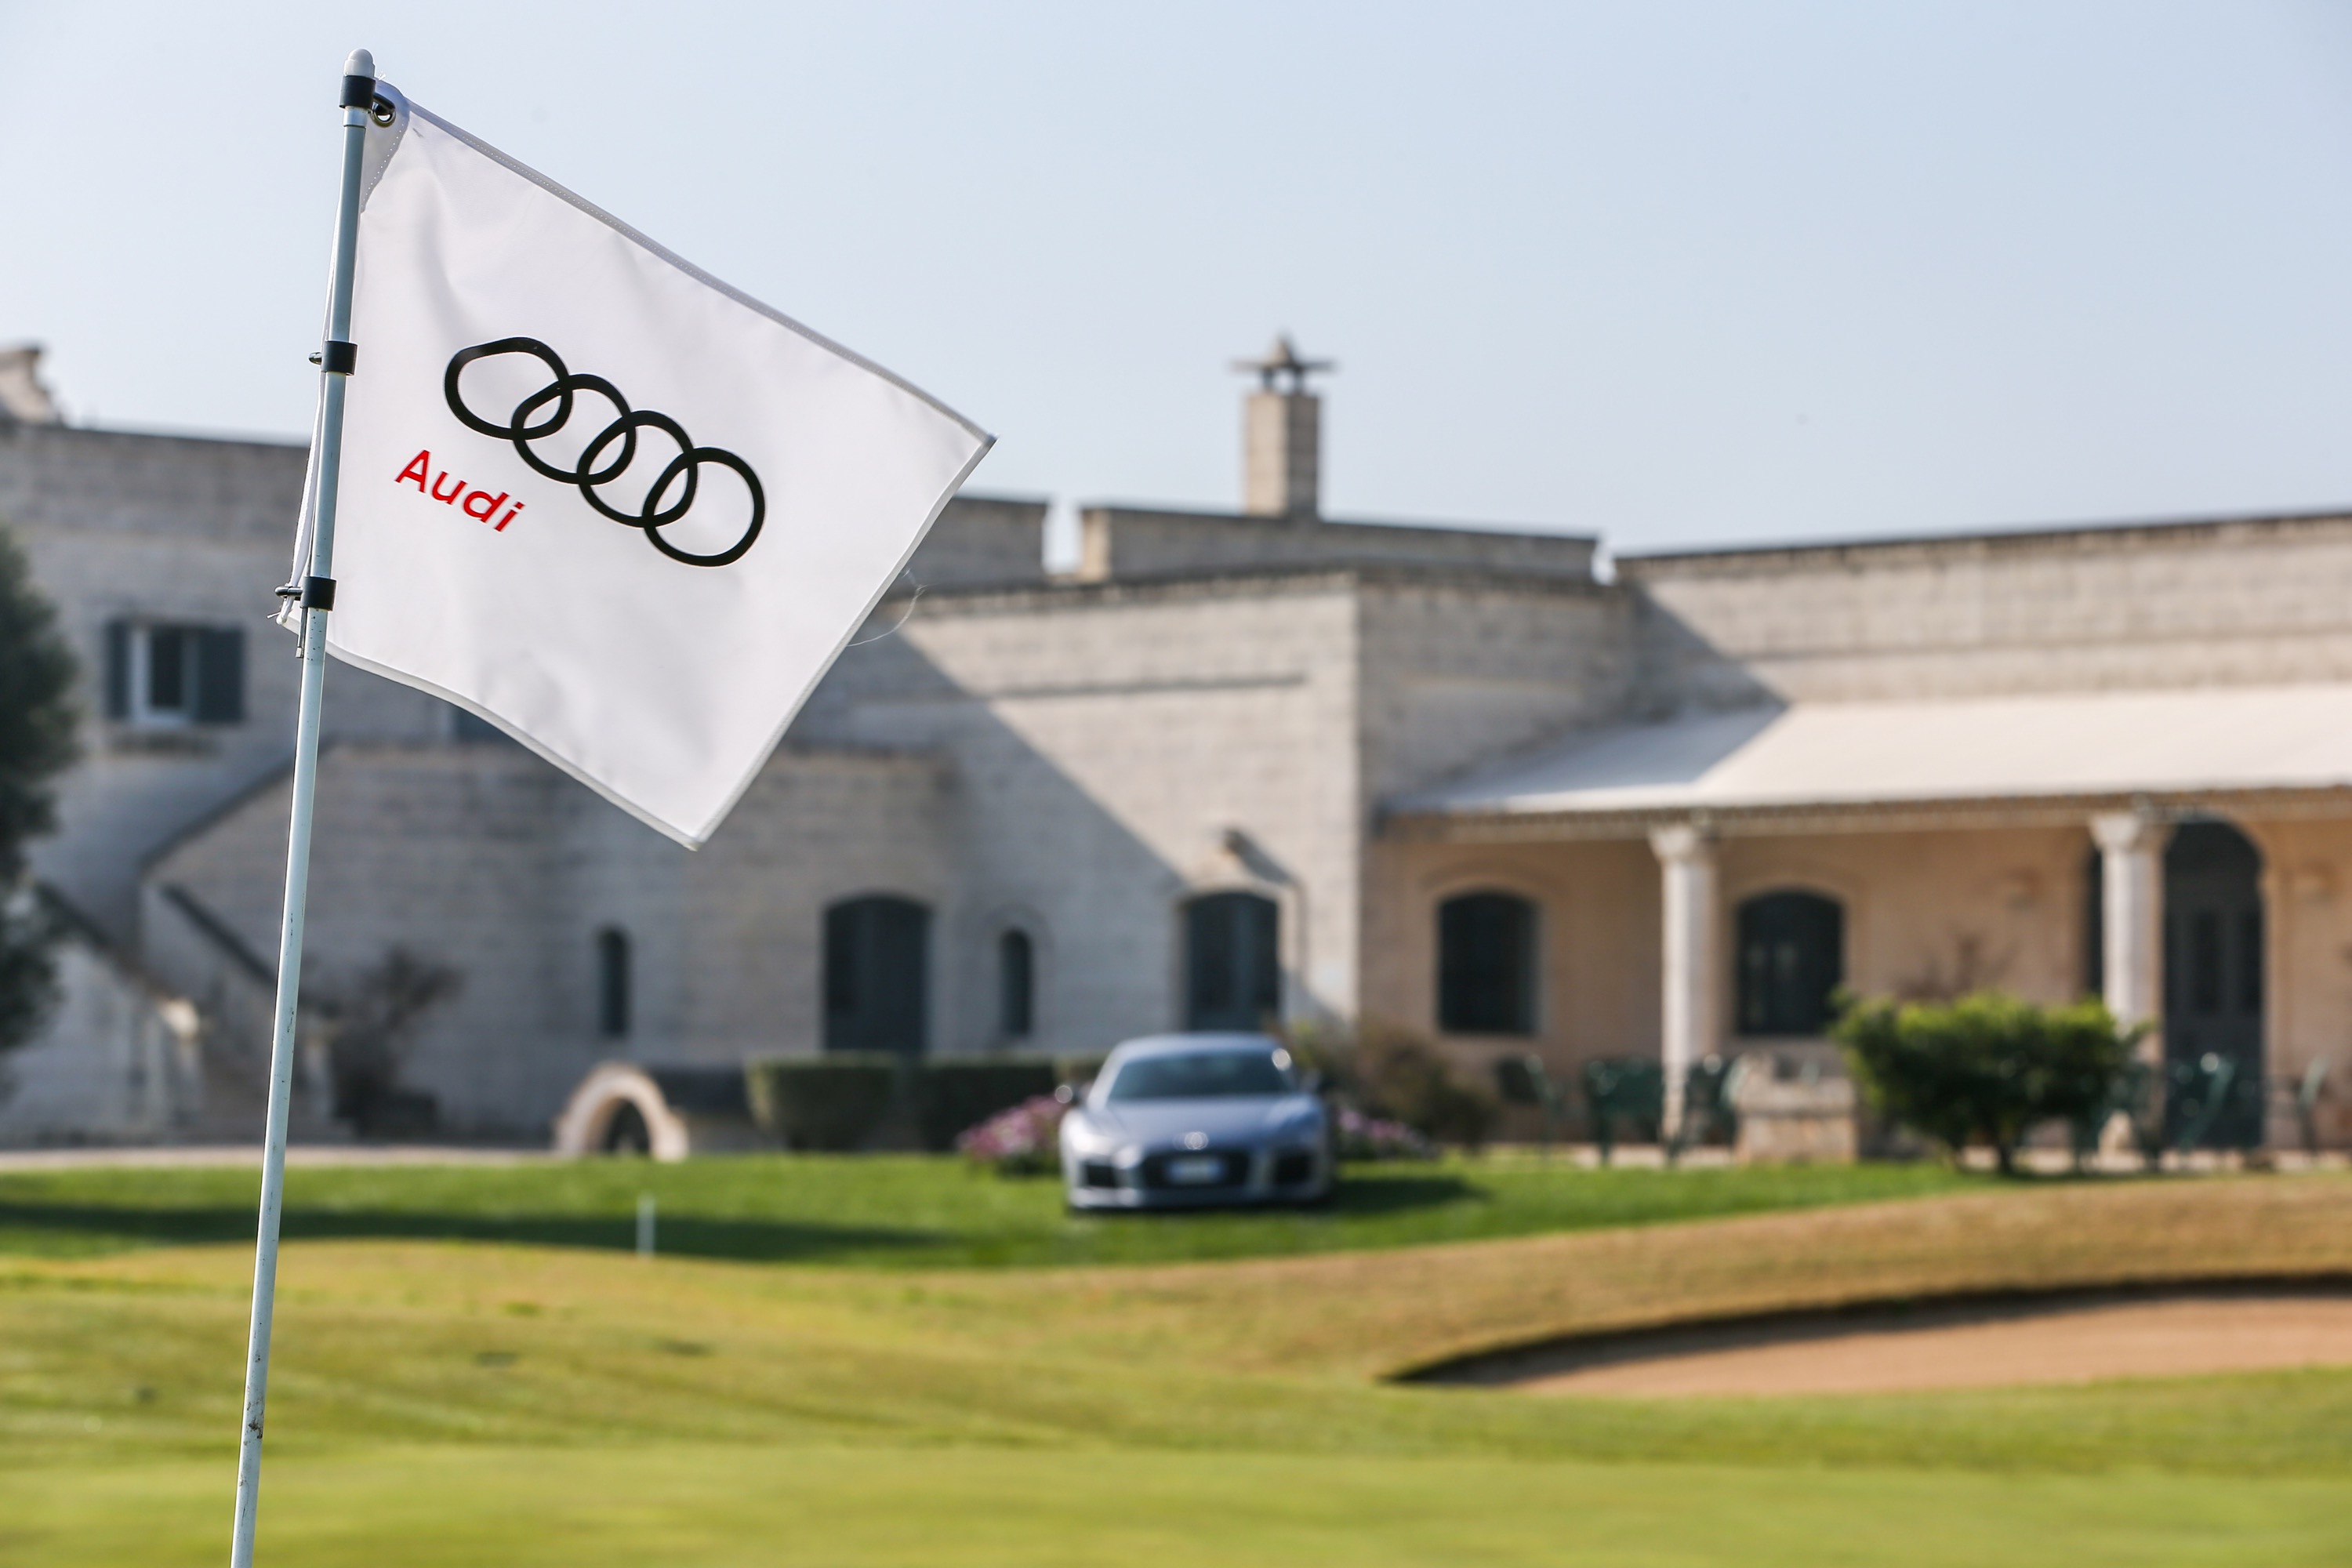 Audi golf experience